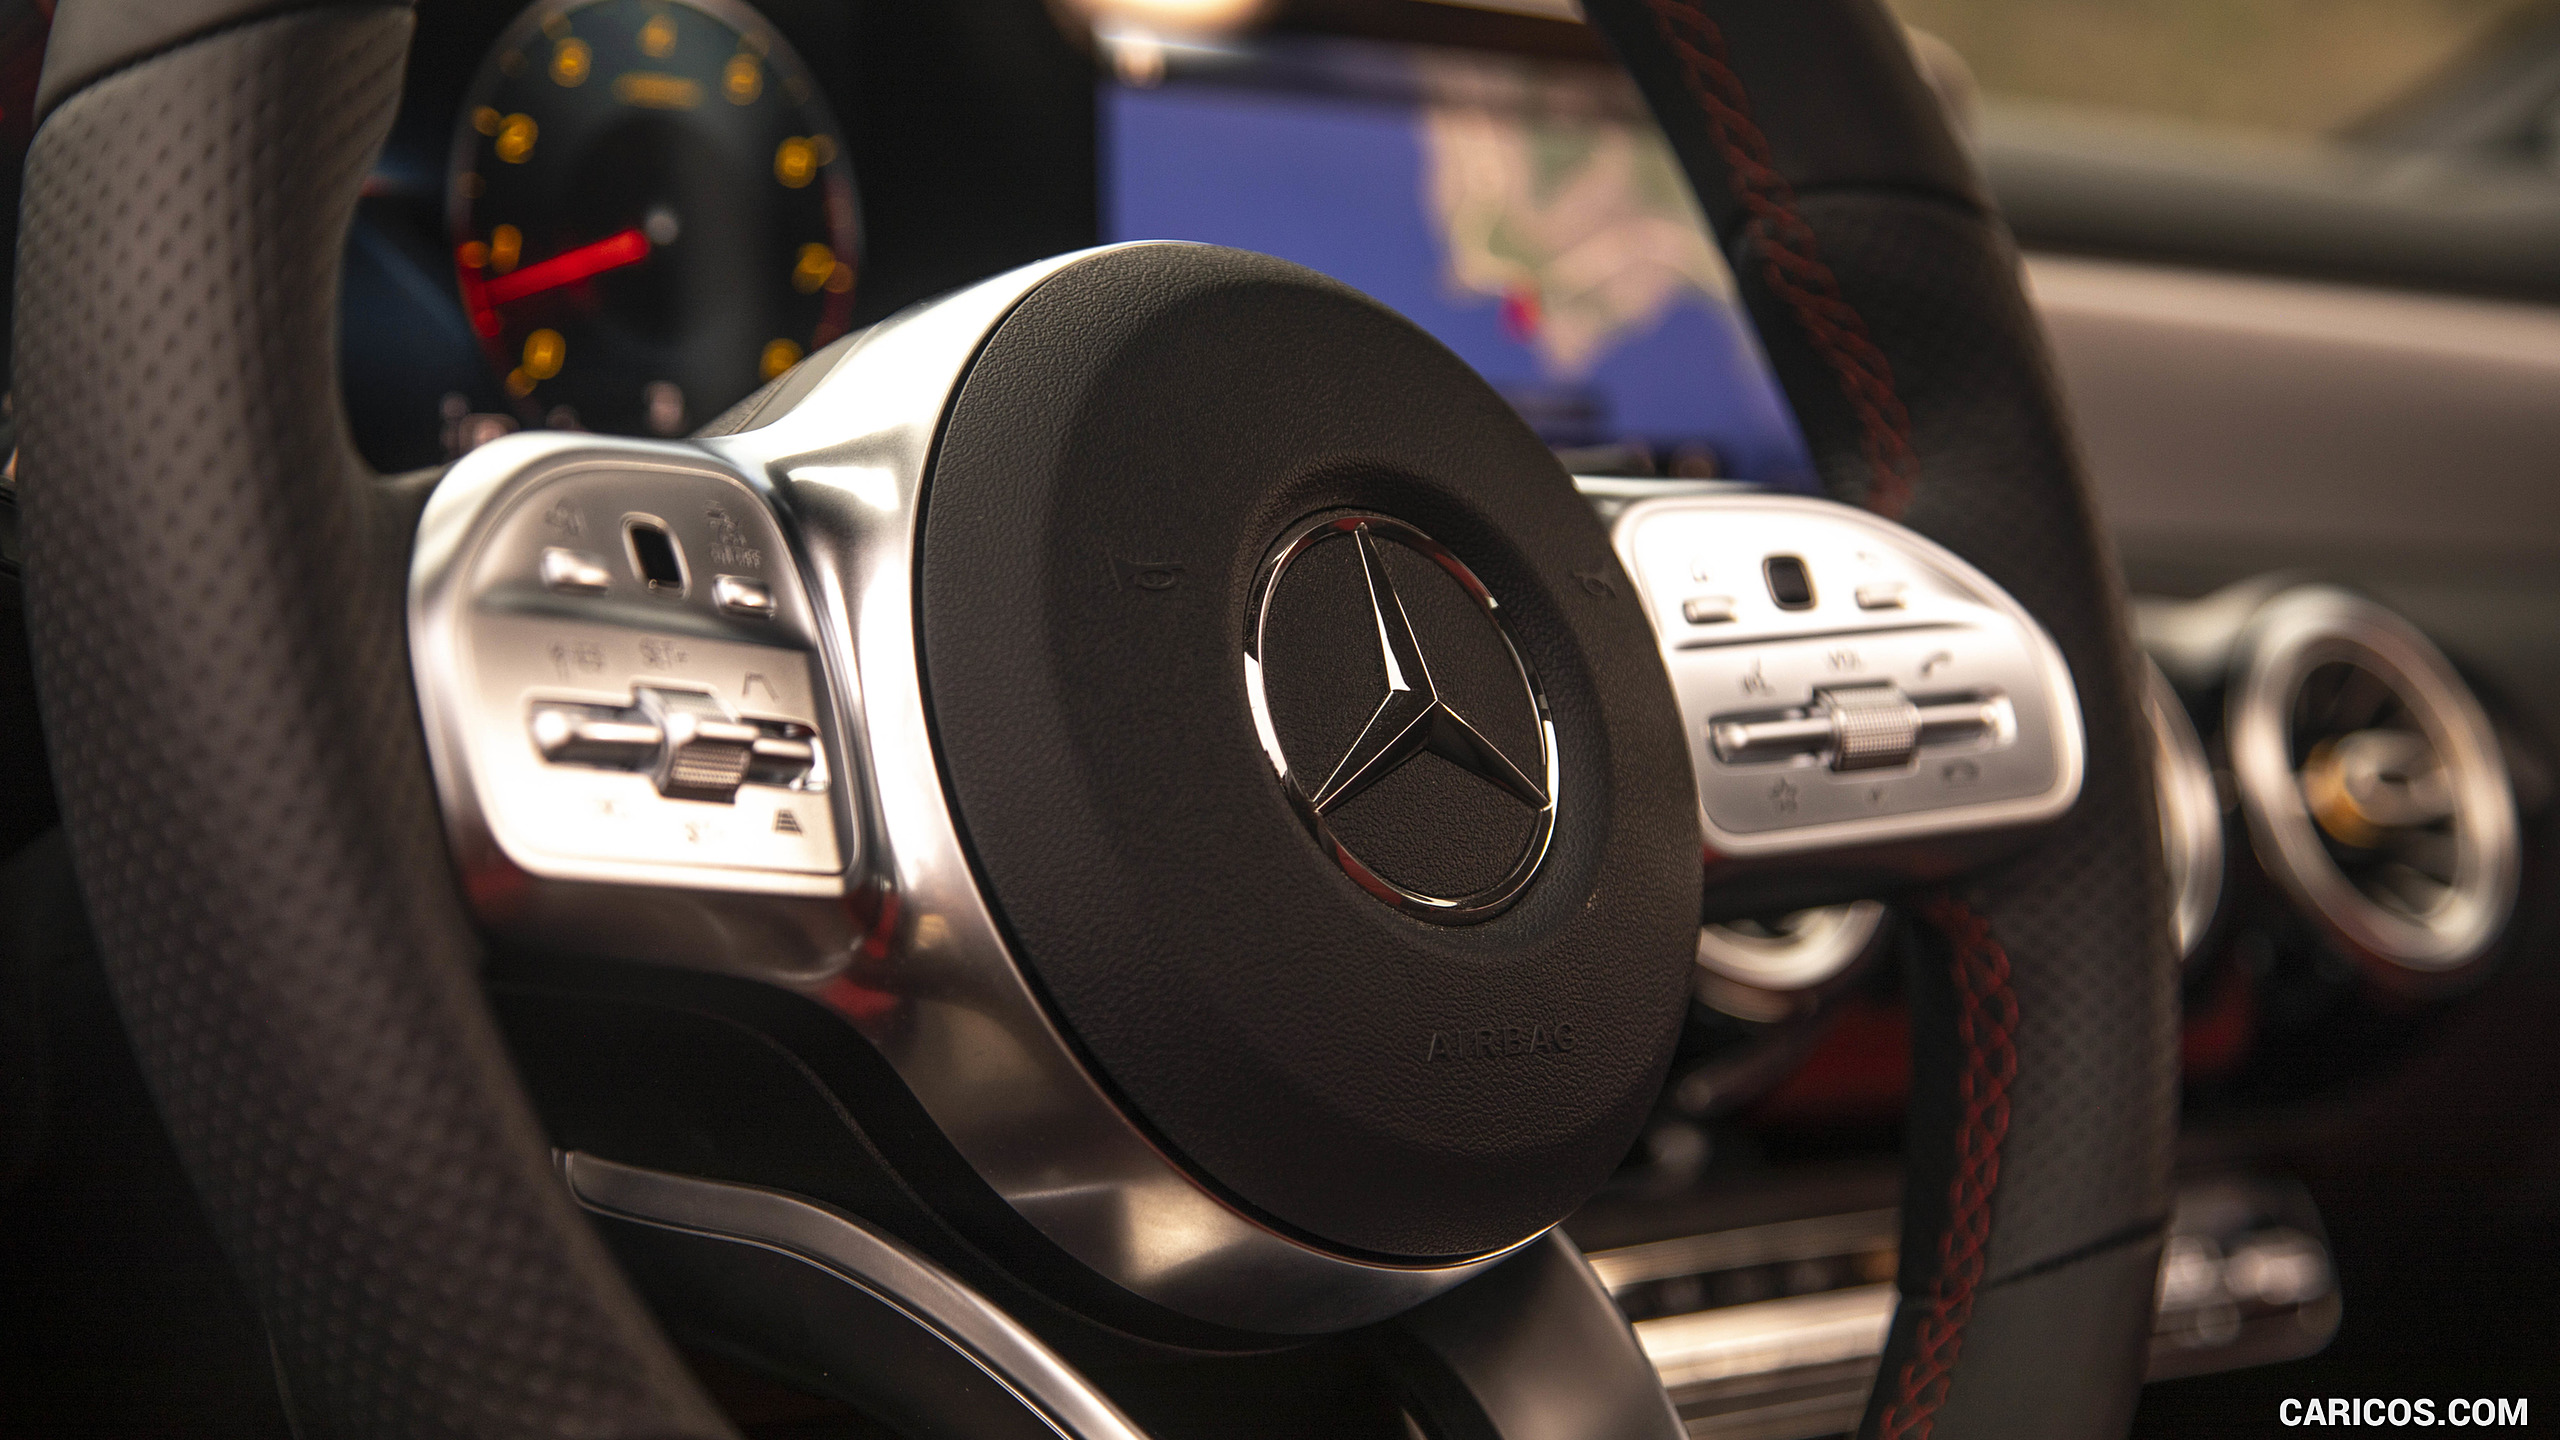 2019 Mercedes-Benz A220 4MATIC Sedan (US-Spec) - Interior, Steering Wheel, #95 of 214